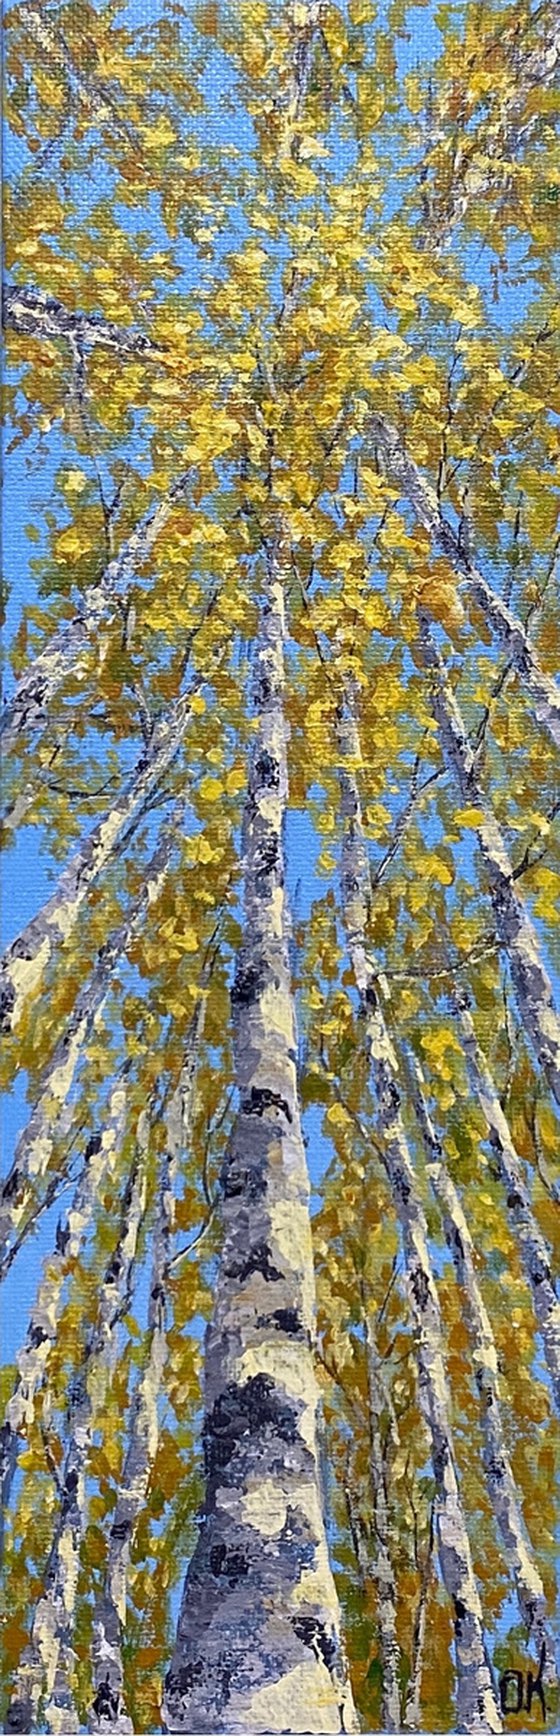 Birches in the sky